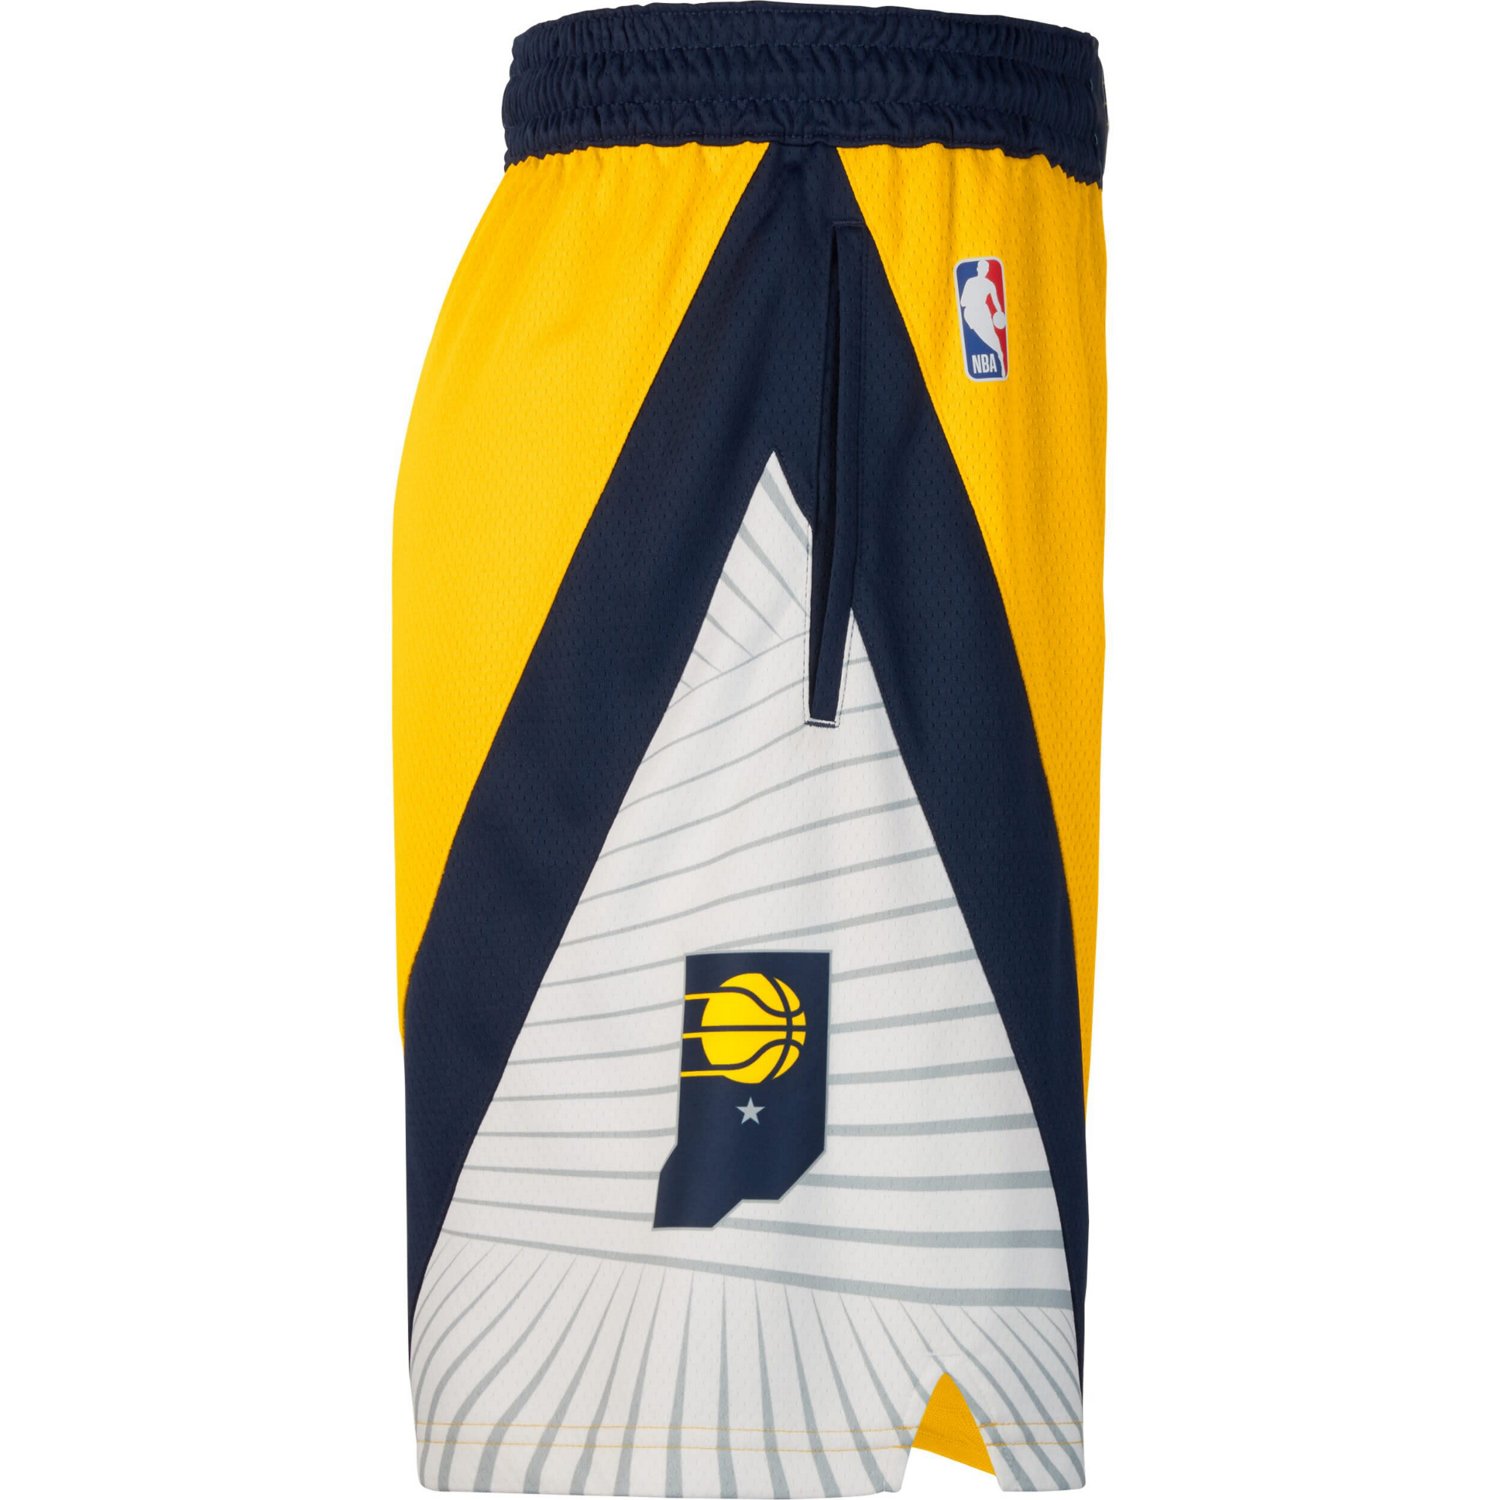 Jordan Brand 2019 20 Indiana Pacers Icon Edition Swingman Shorts Academy